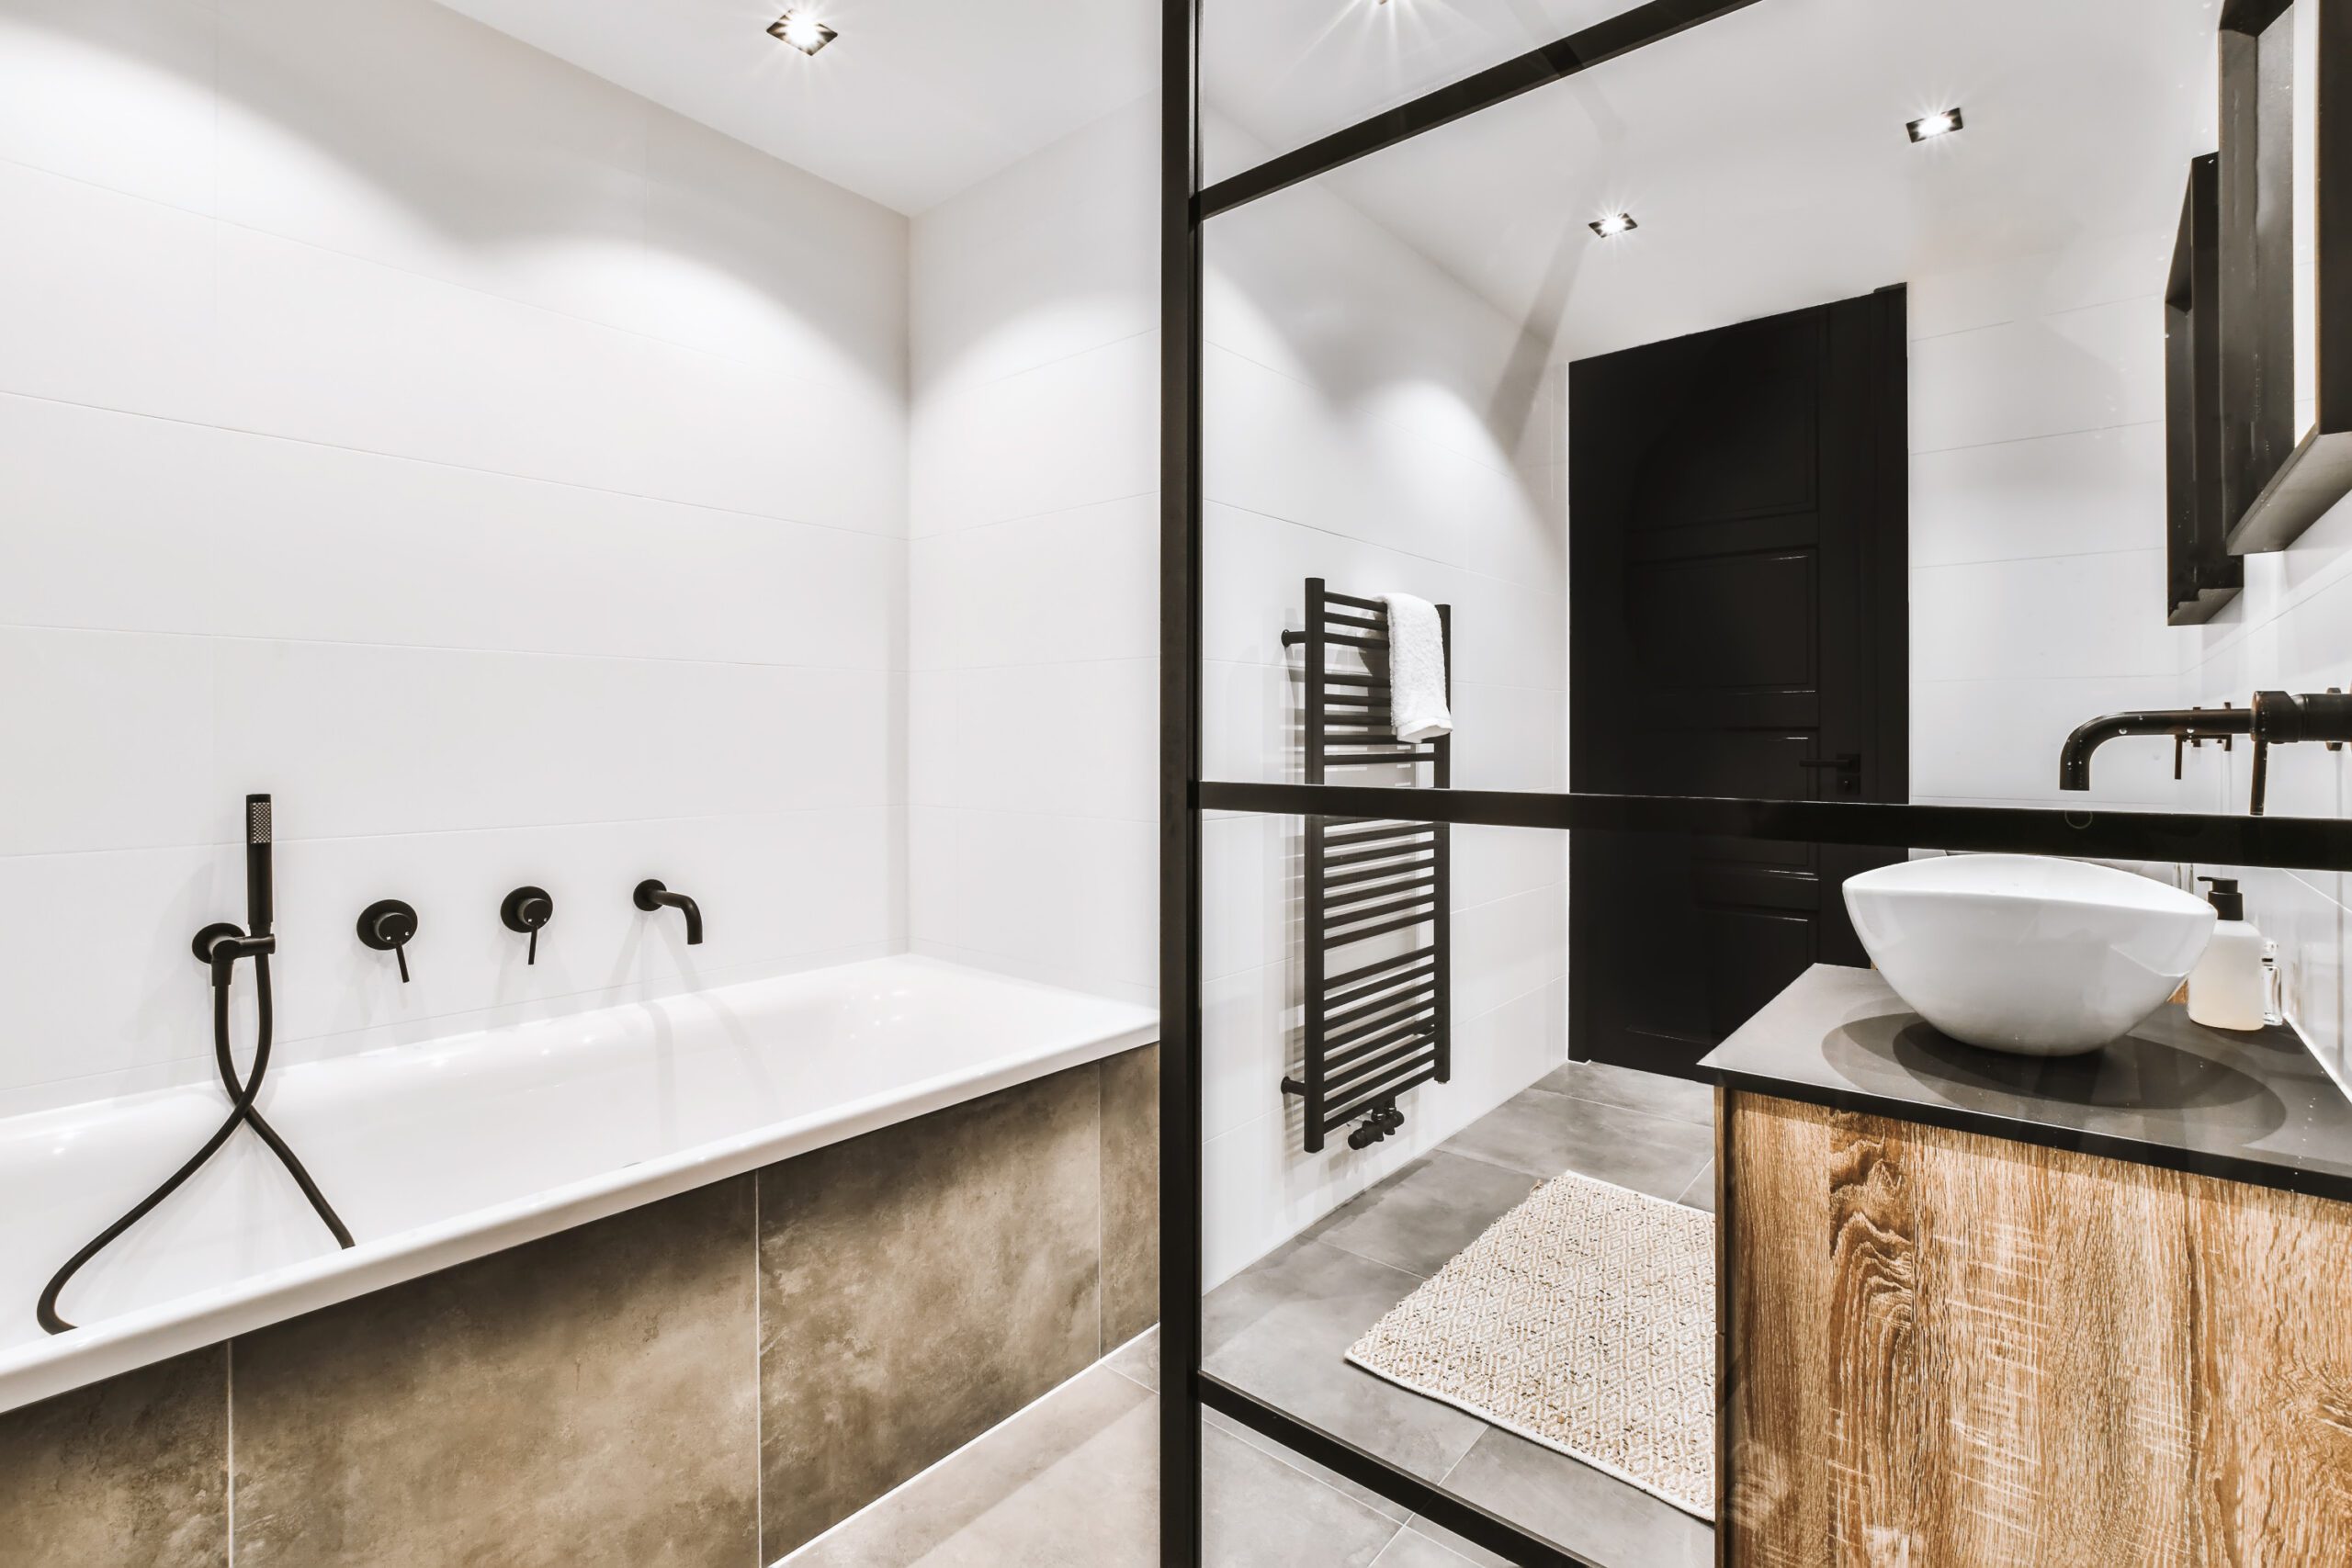 stylish-bathroom-with-oval-sink-and-mirror-2022-03-03-00-14-51-utc-scaled.jpg